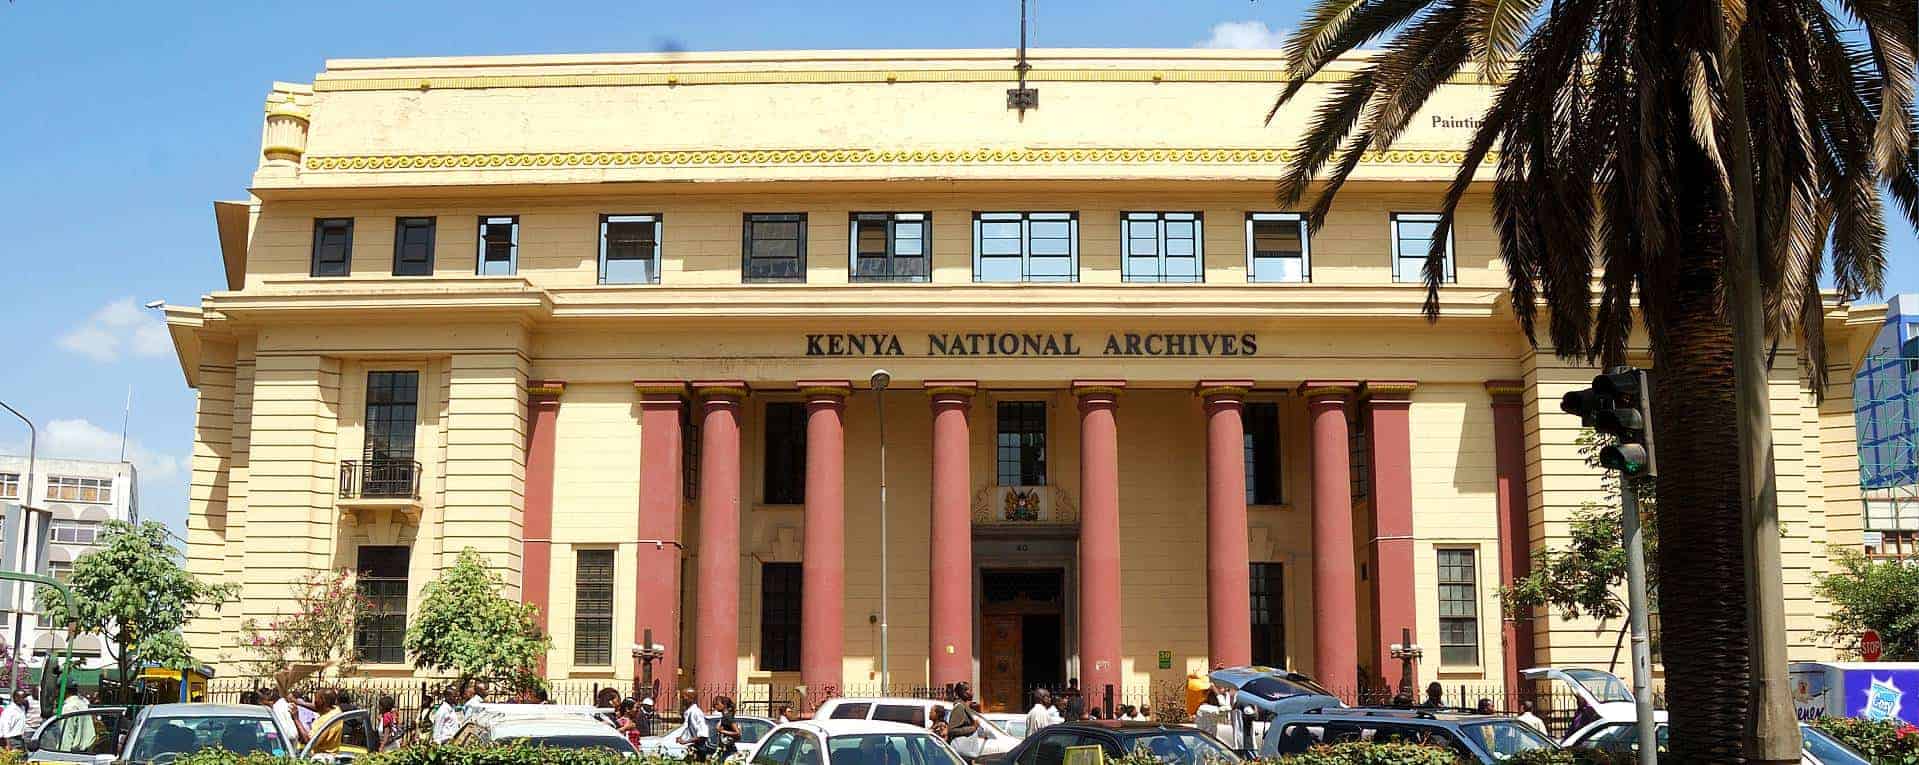 places to visit in nairobi - kenyanationalarchives